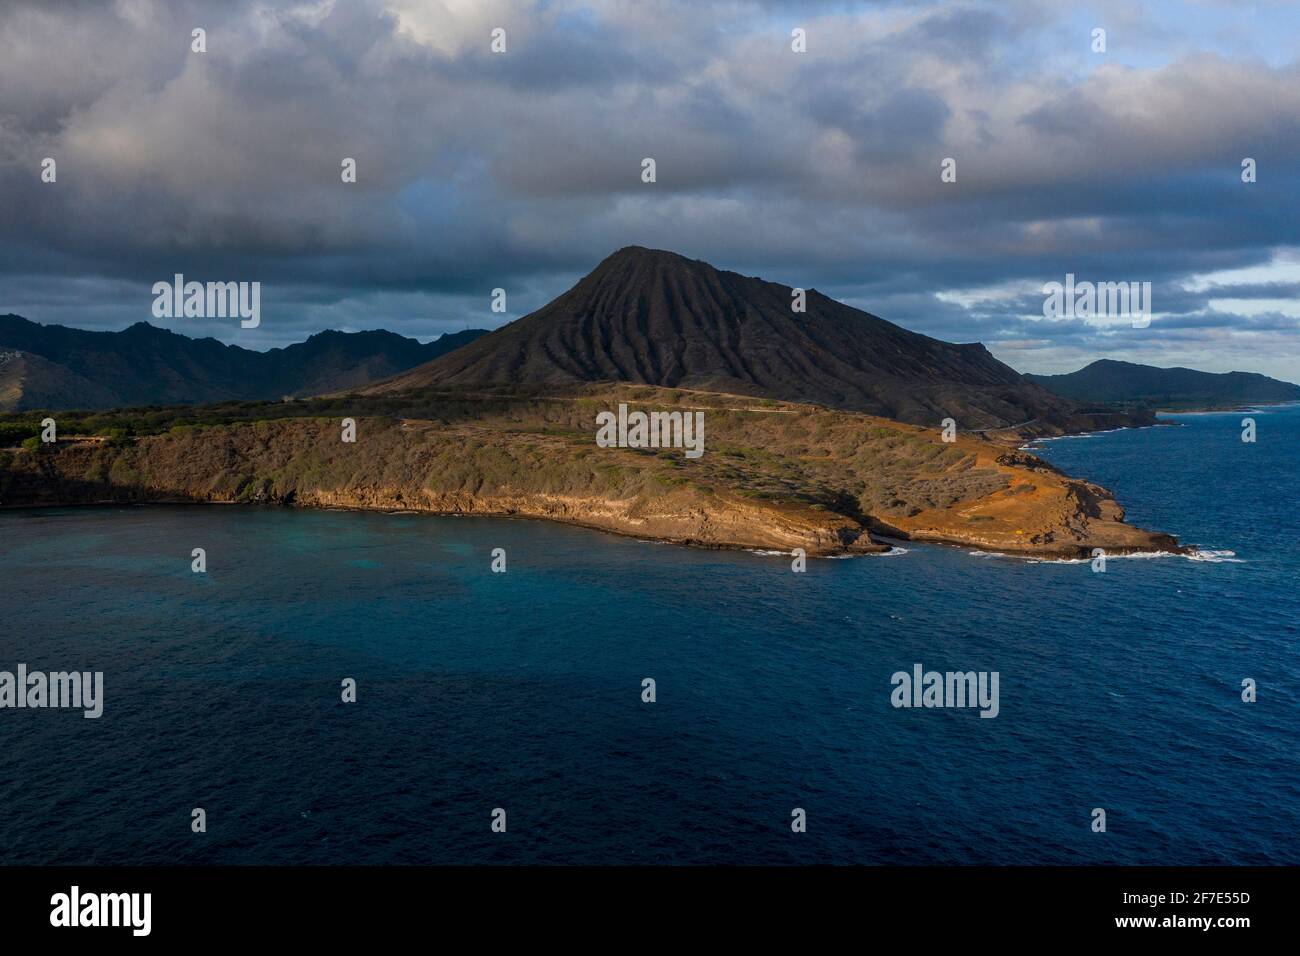 Striking shot of the leeward side of of the island of O'ahu Stock Photo